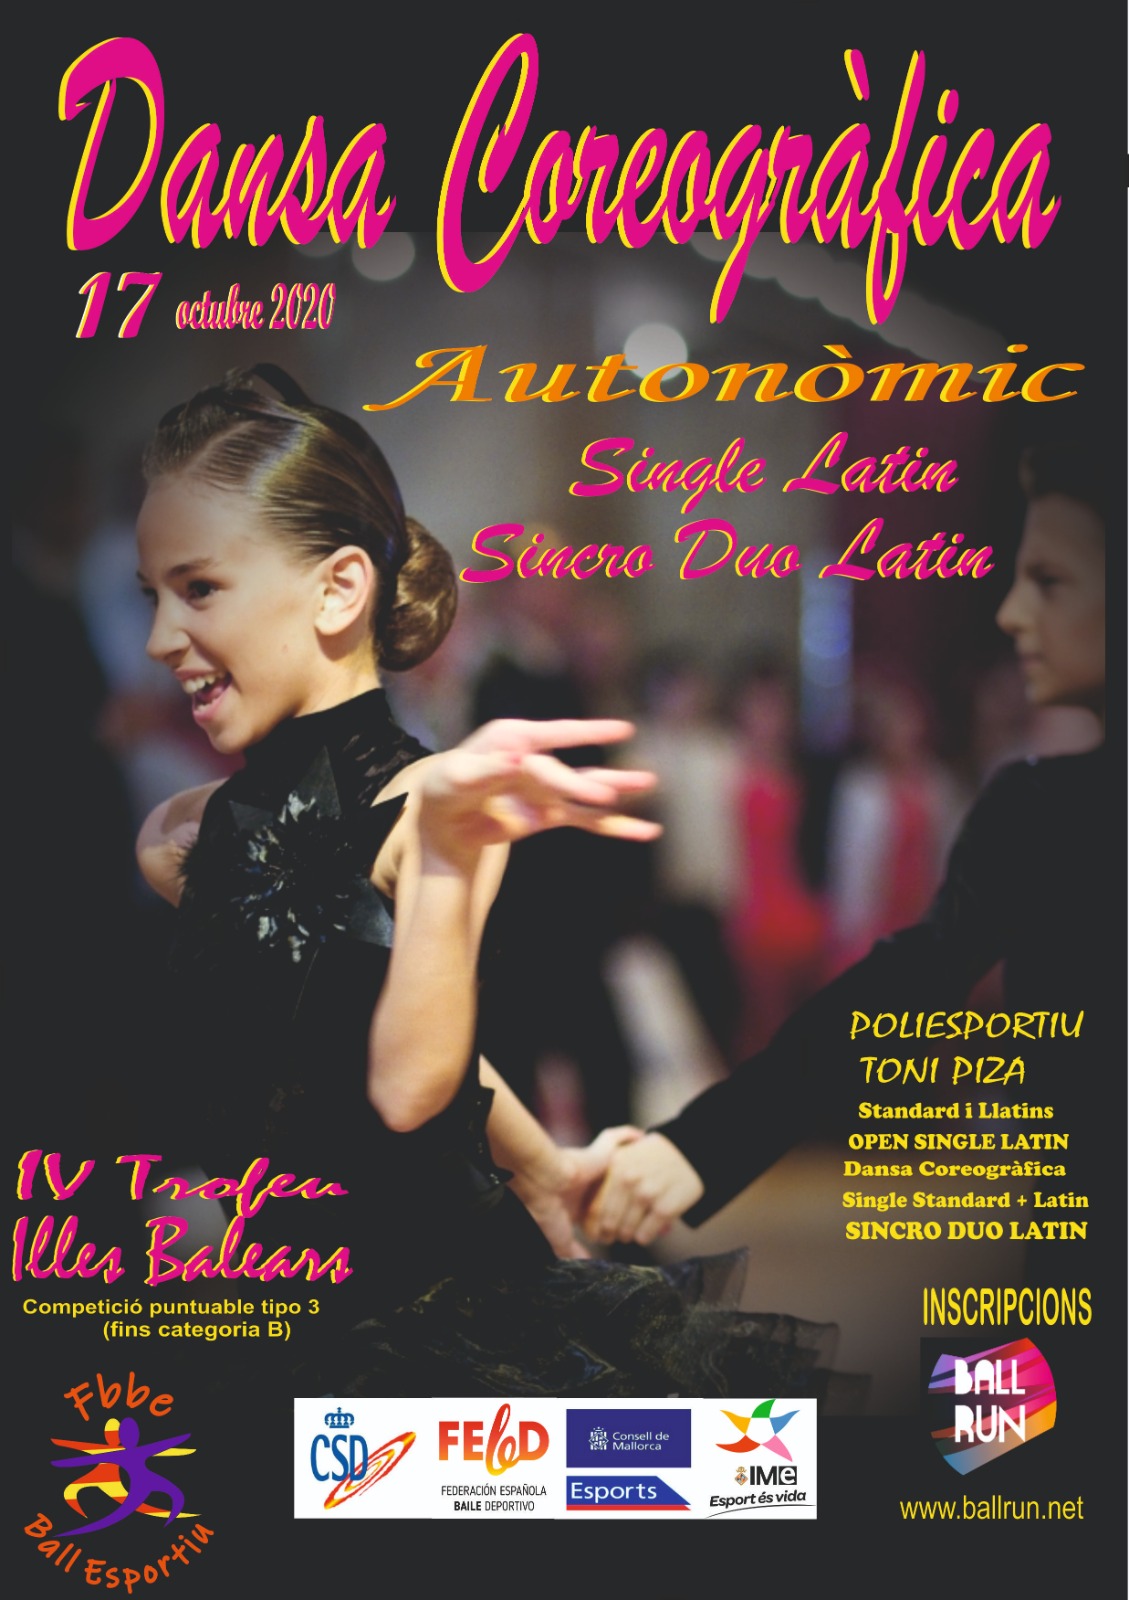 Campionat autonòmic Dansa Coreogràfica, Autonòmic Single Latin & Autonòmic Synchro Latin 2020